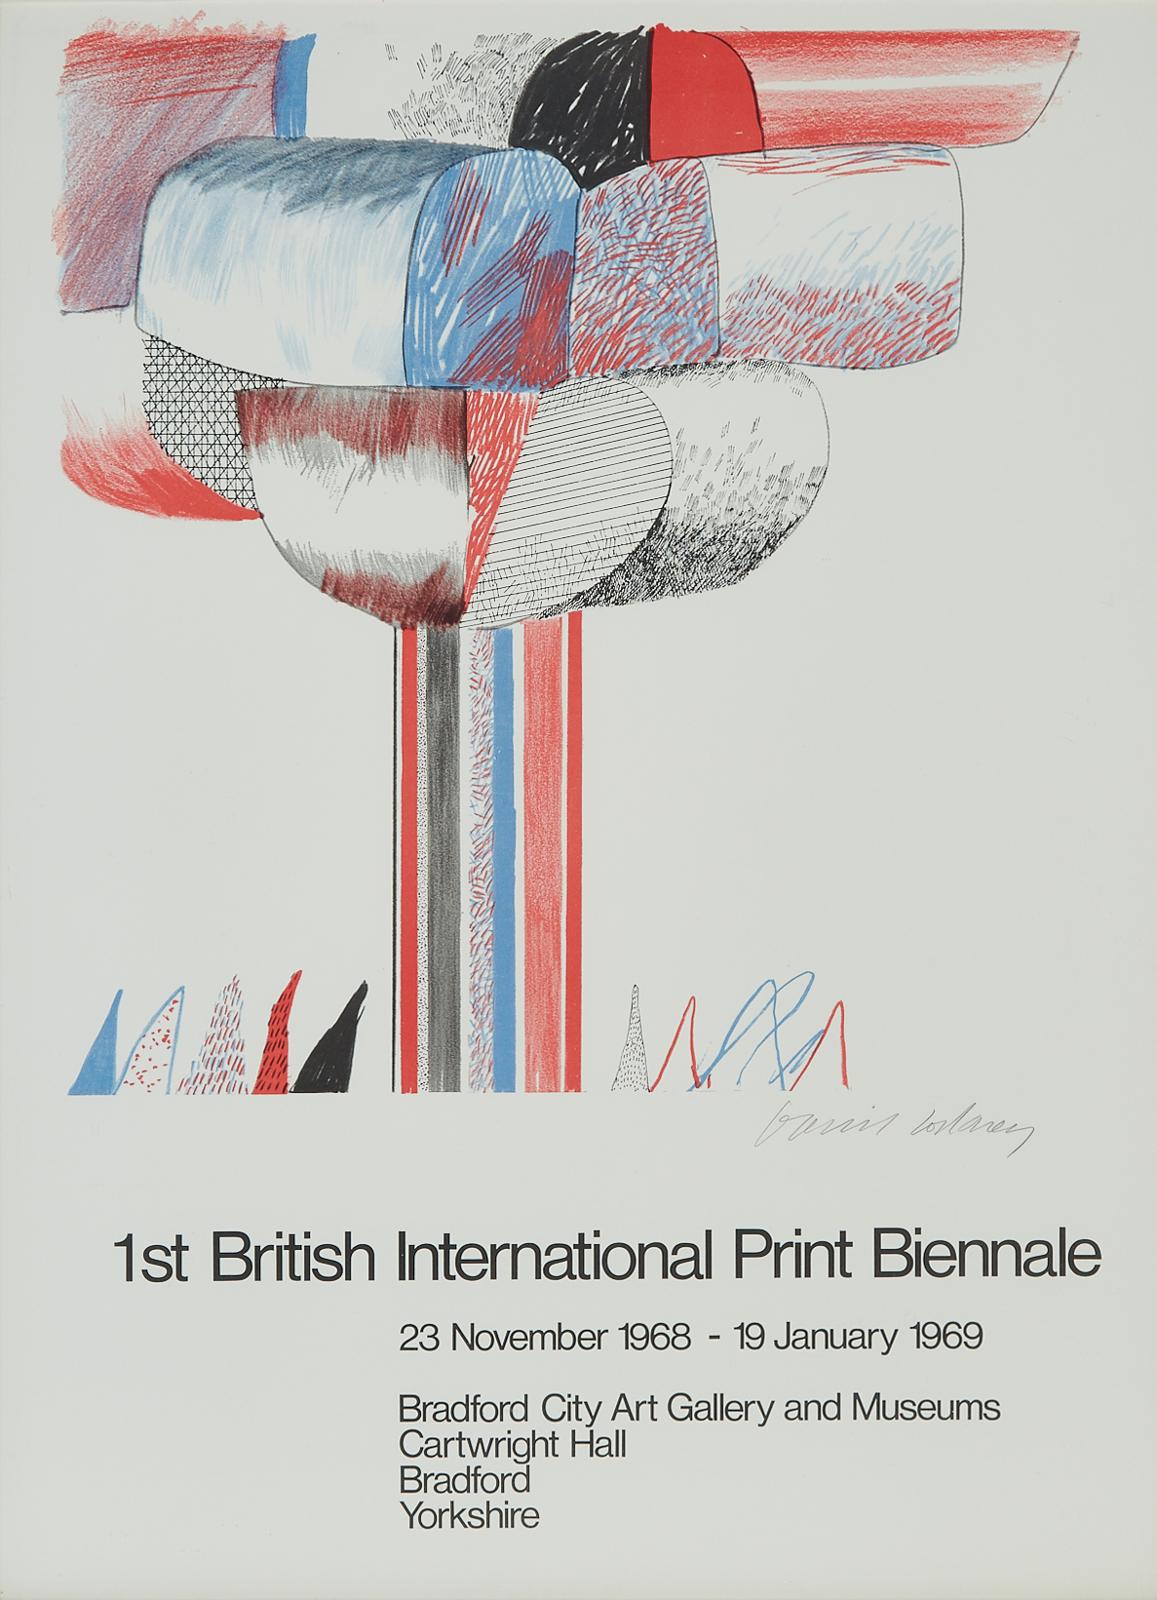 David Hockney (1937) - 1st British International Print Biennale, Bradford City Art Gallery, 1968 [baggott, 20]